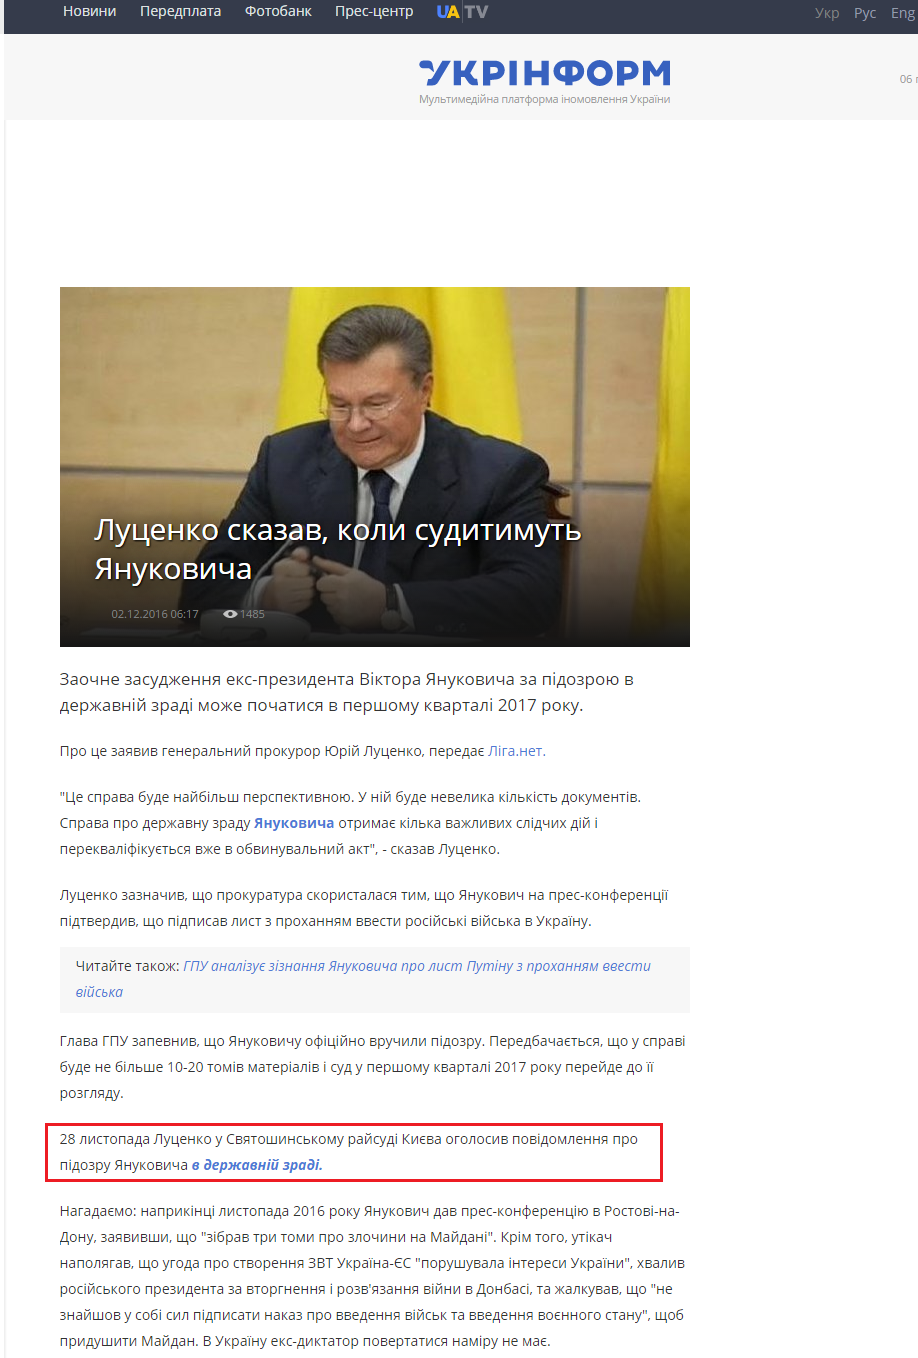 http://www.ukrinform.ua/rubric-politycs/2131824-lucenko-skazav-koli-suditimut-anukovica.html